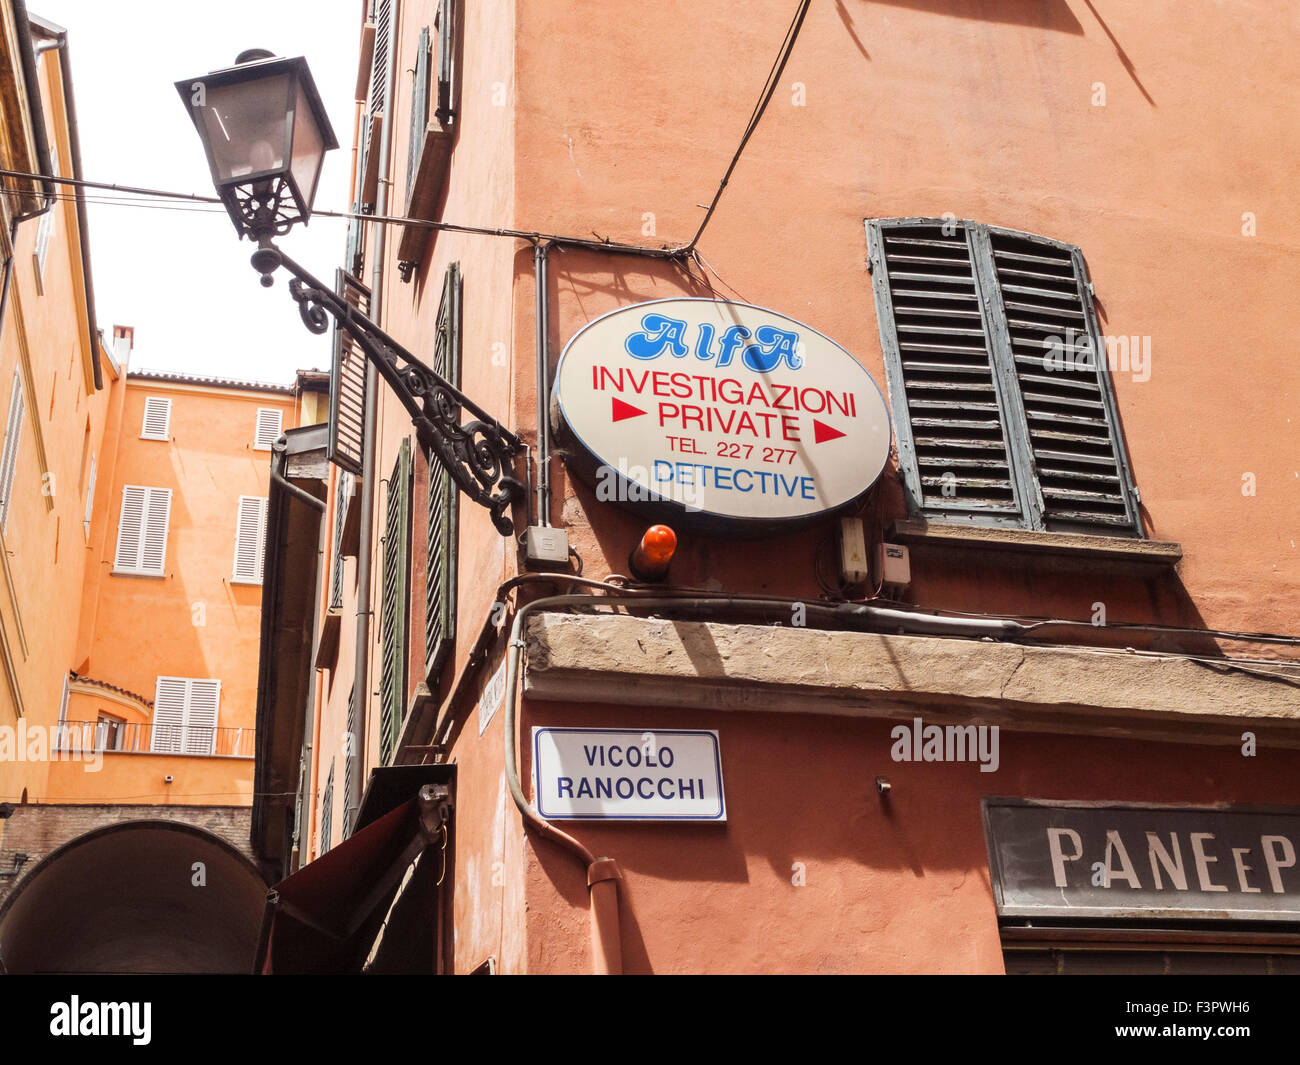 Italy, Emilia-Romagna region, Bologna - private detective agency. Stock Photo